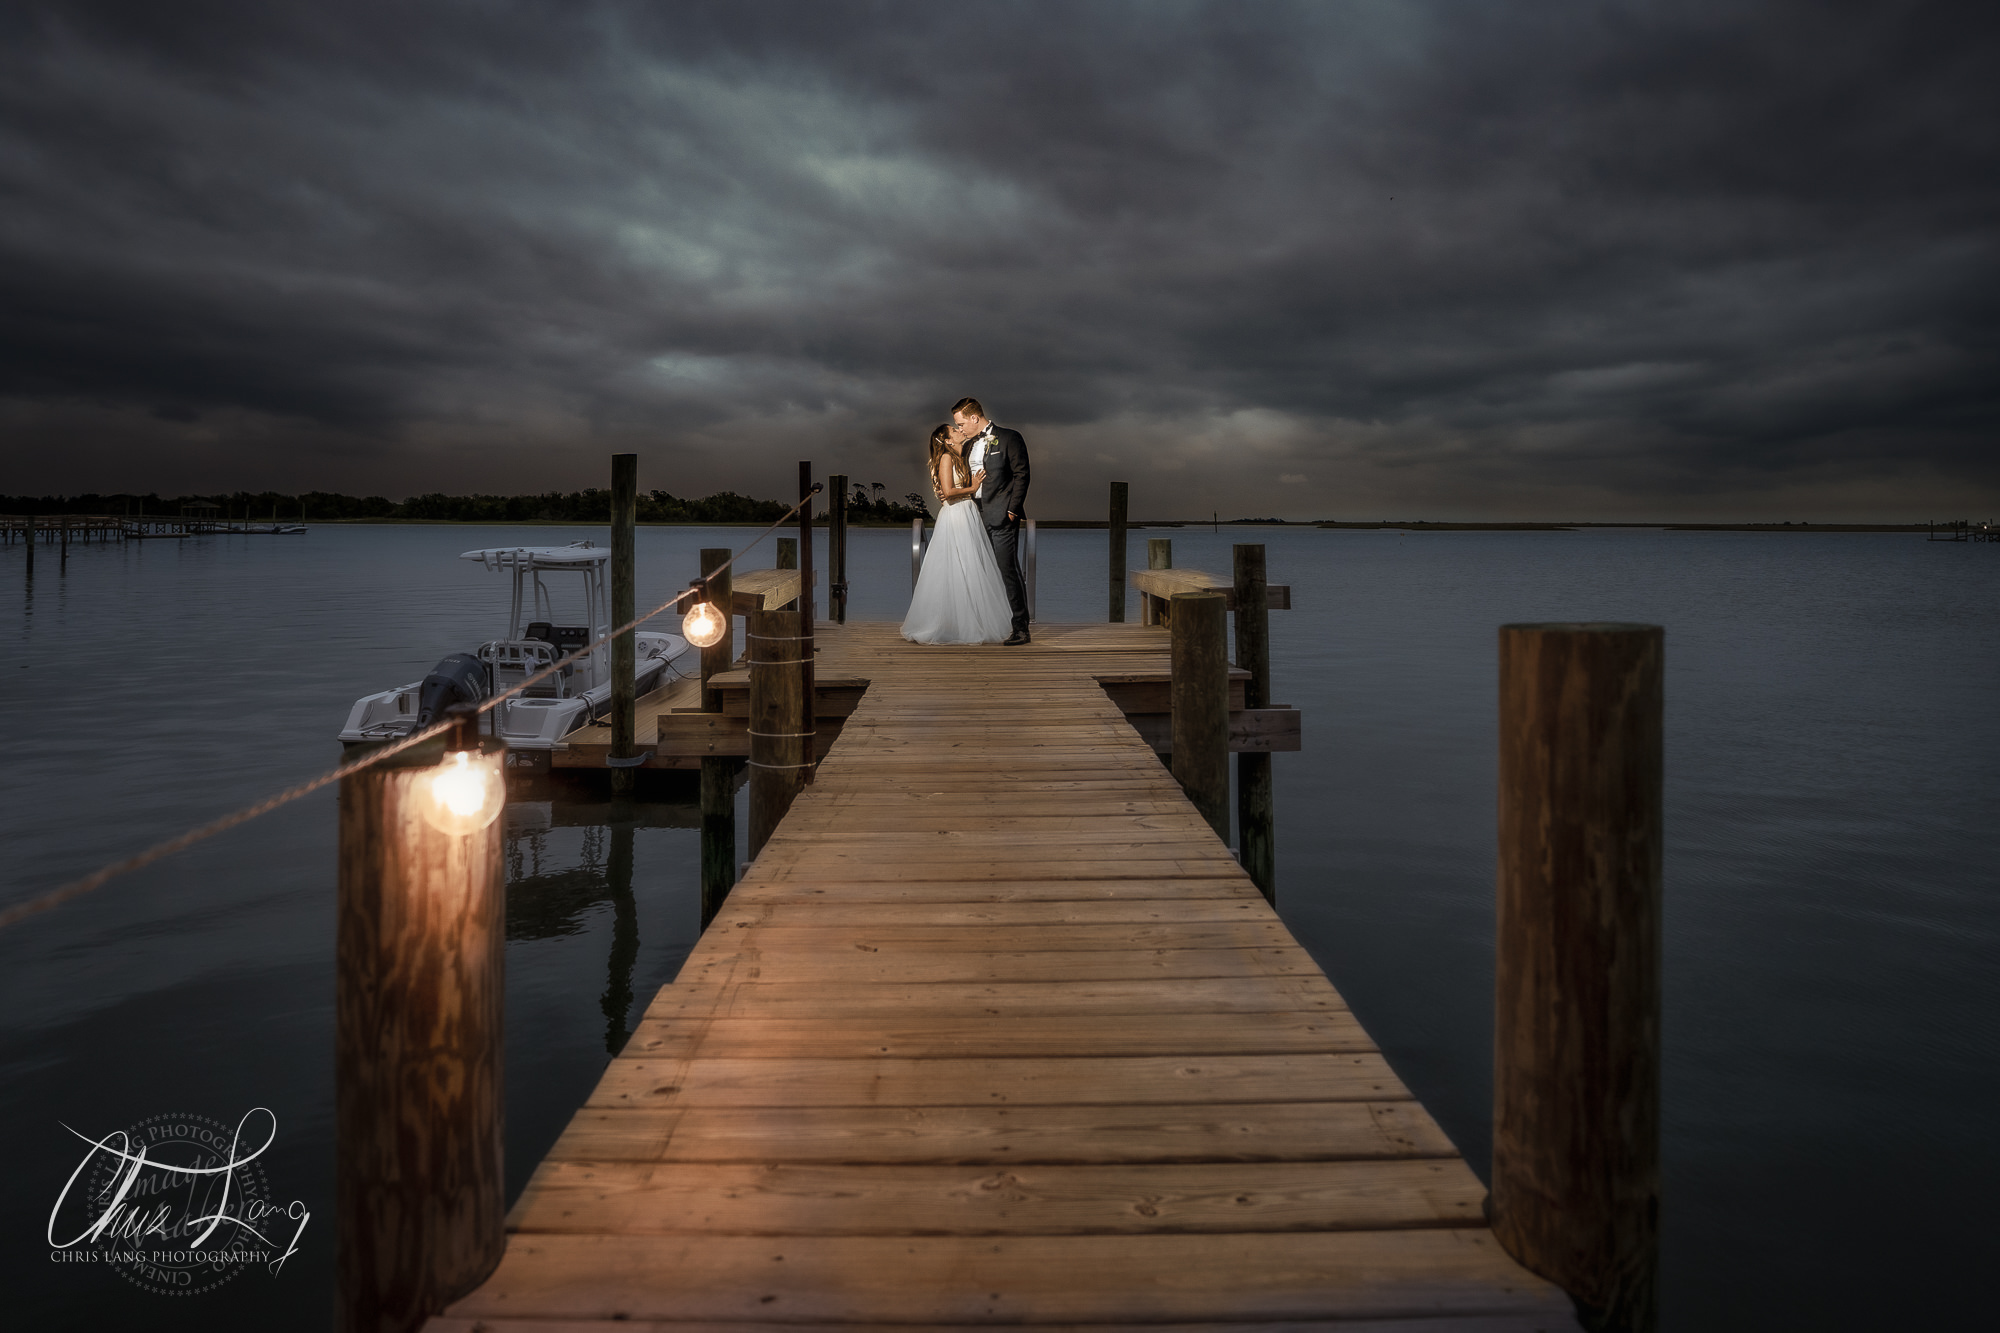 Bride and groom kissingi in a winery inbetween wine barrels - Wedding Photograpy Ideas -lWIlmington NC Wedding Photographers - 